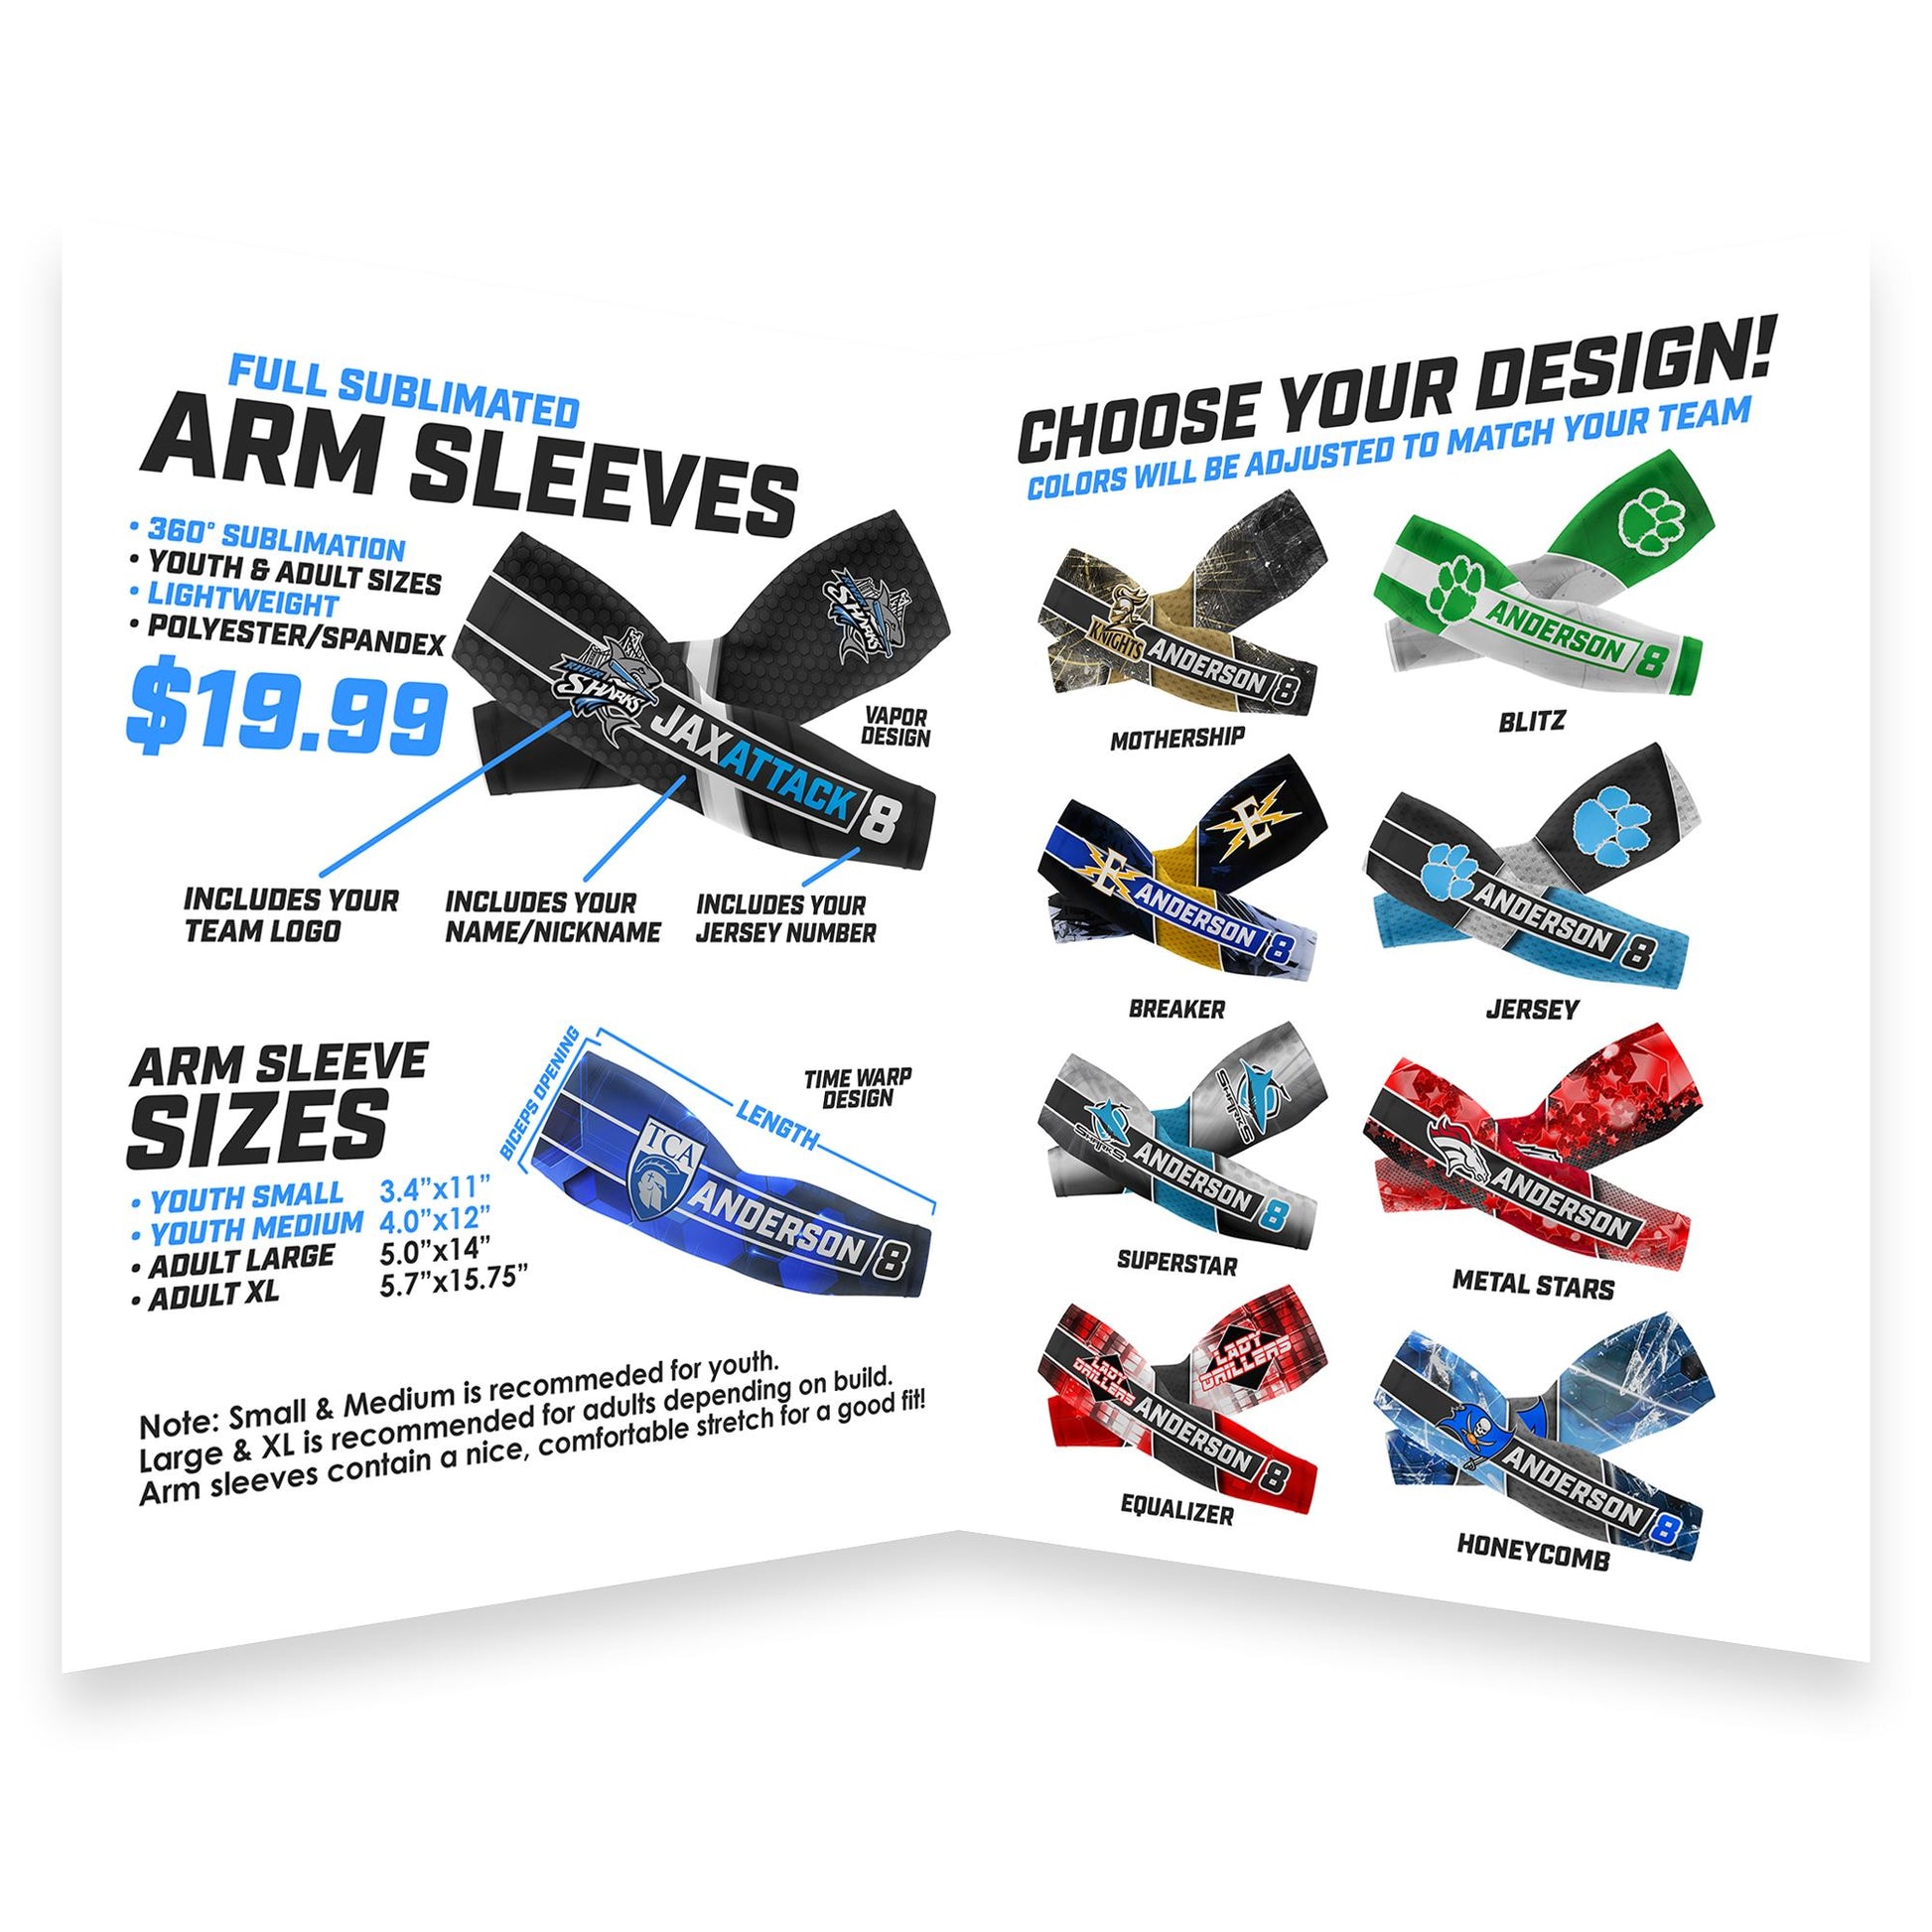 Arm Sleeve Marketing - Parent Order Forms-Photoshop Template - PSMGraphix